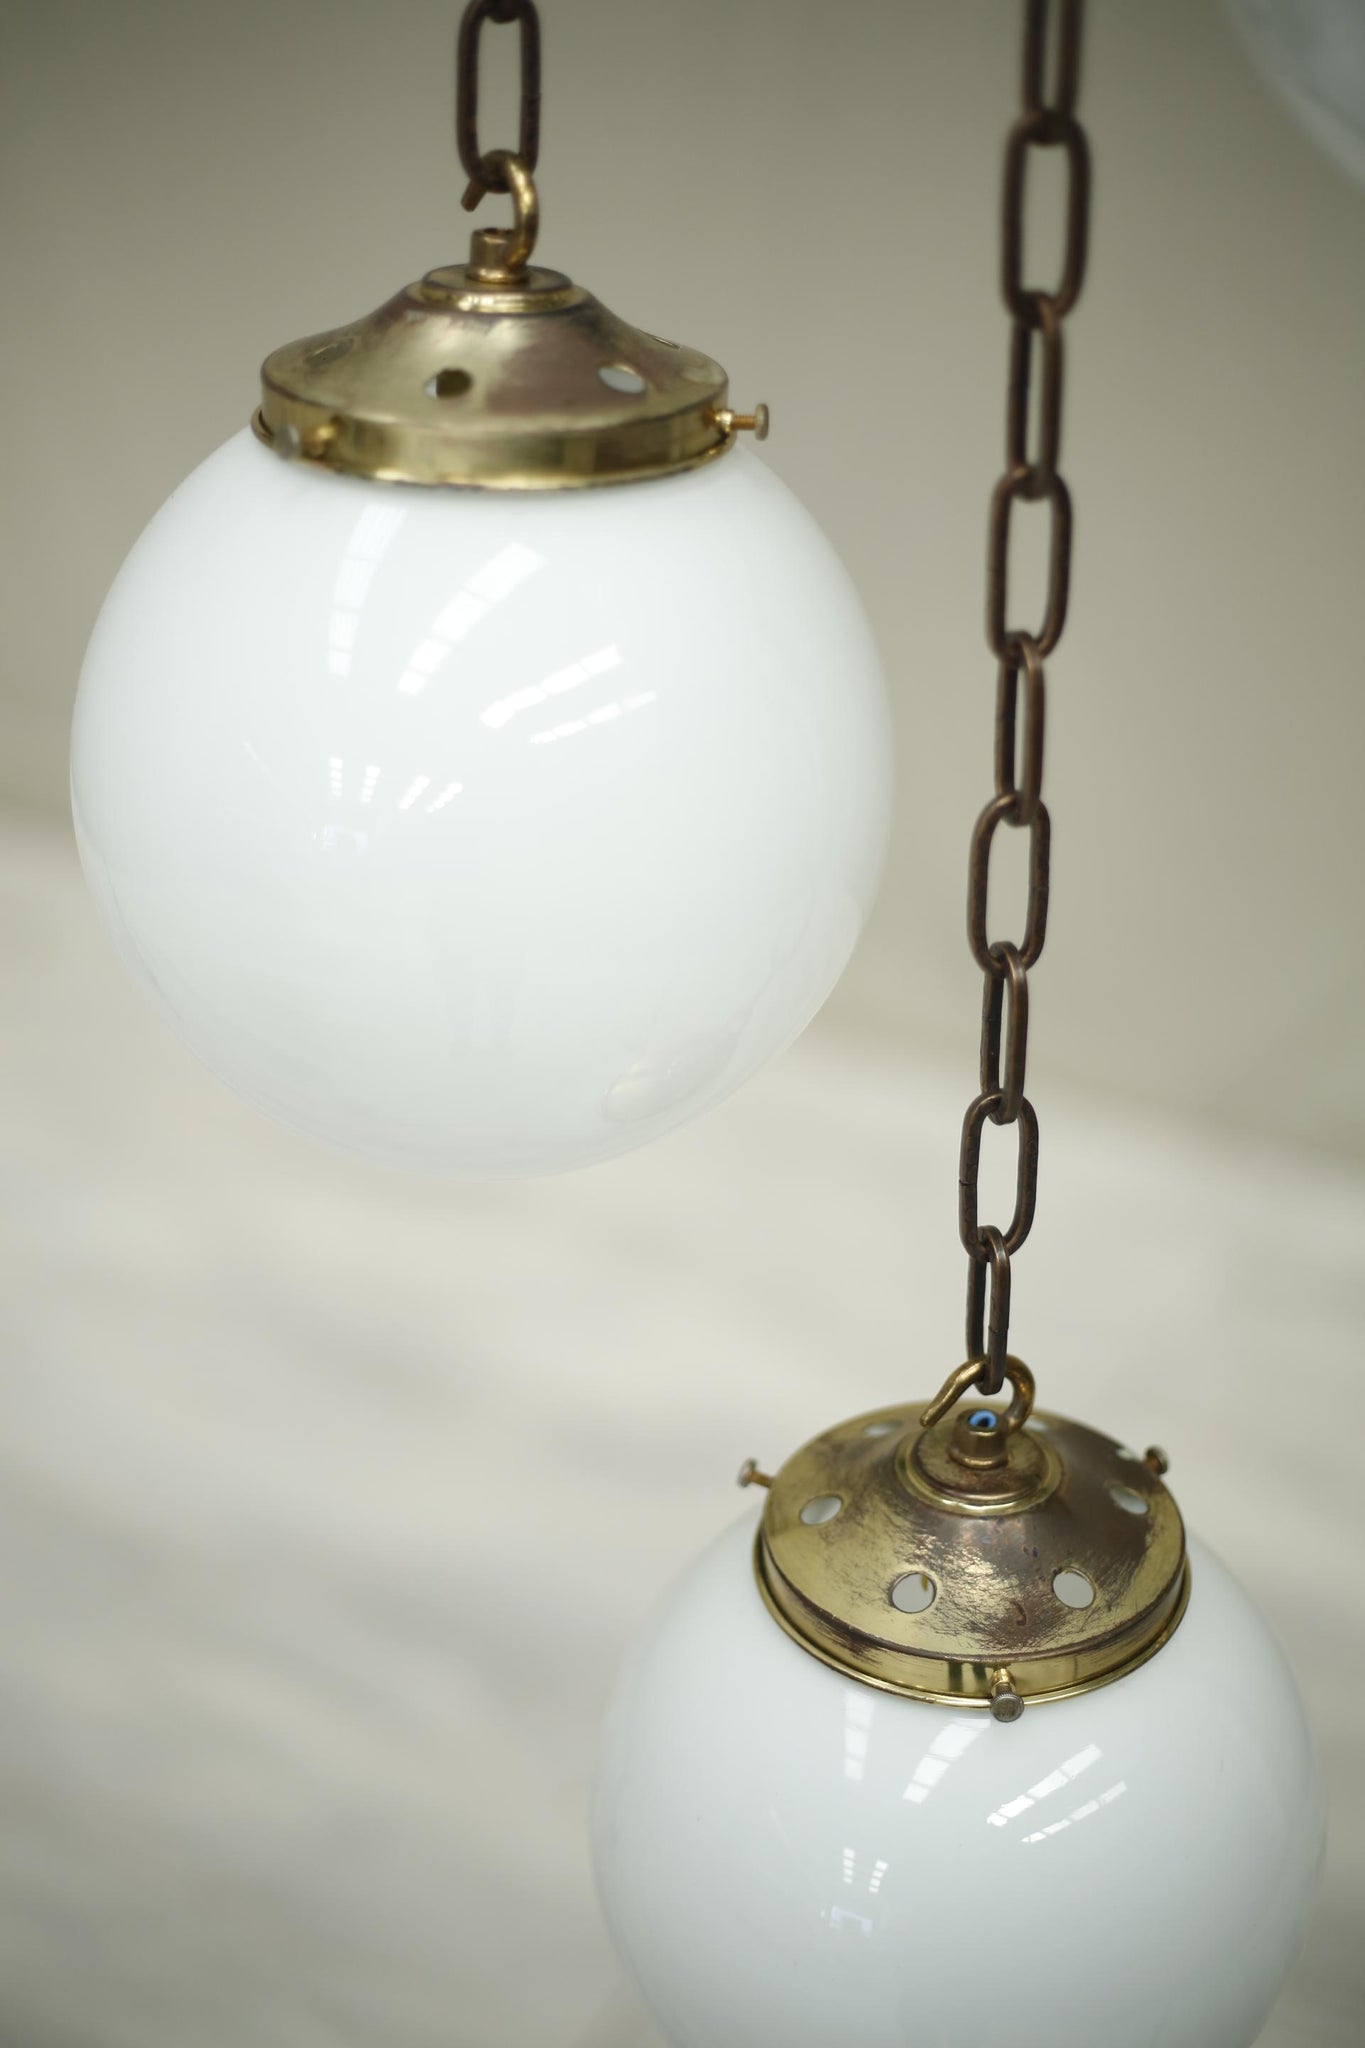 Huge run of 20th century small opaline globe pendant lights